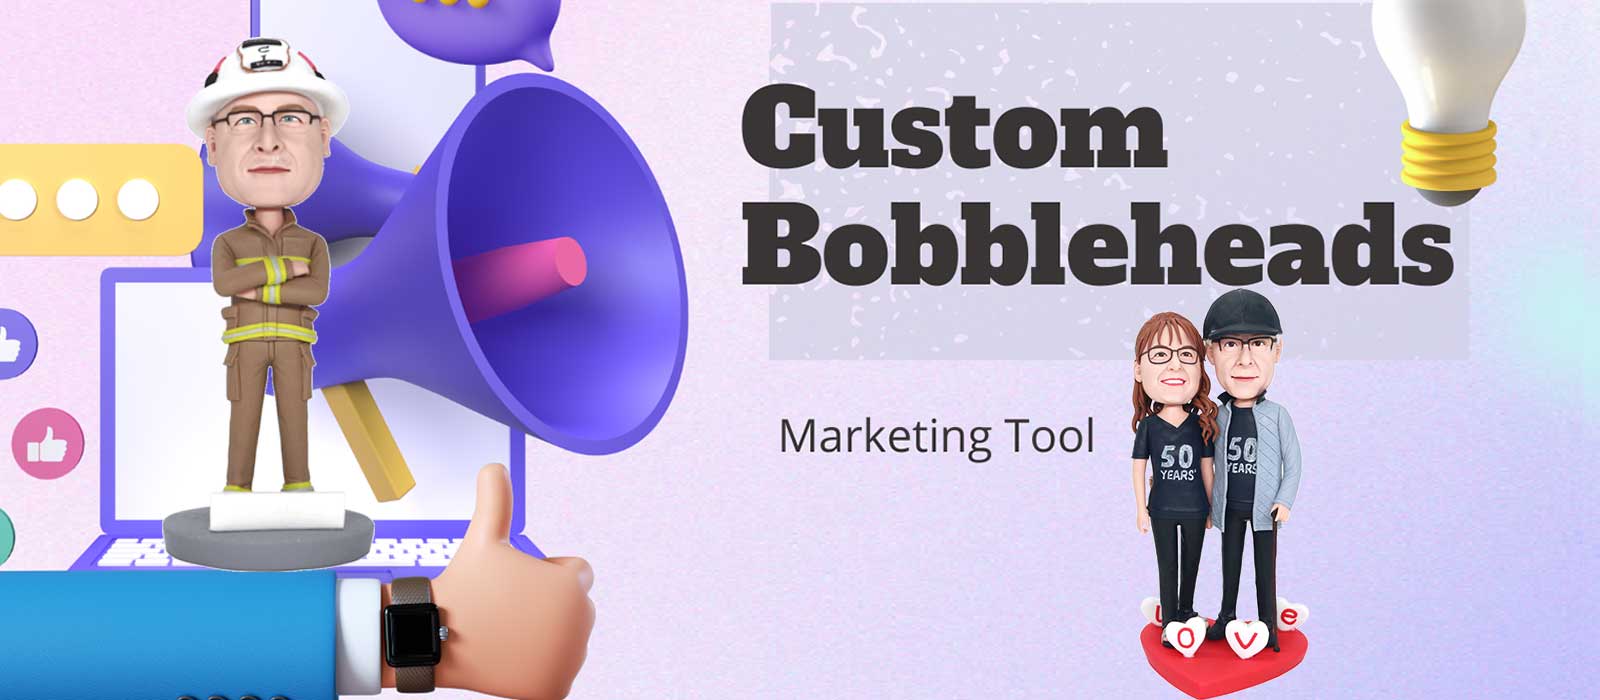 Custom Bobbleheads As Marketing Tool